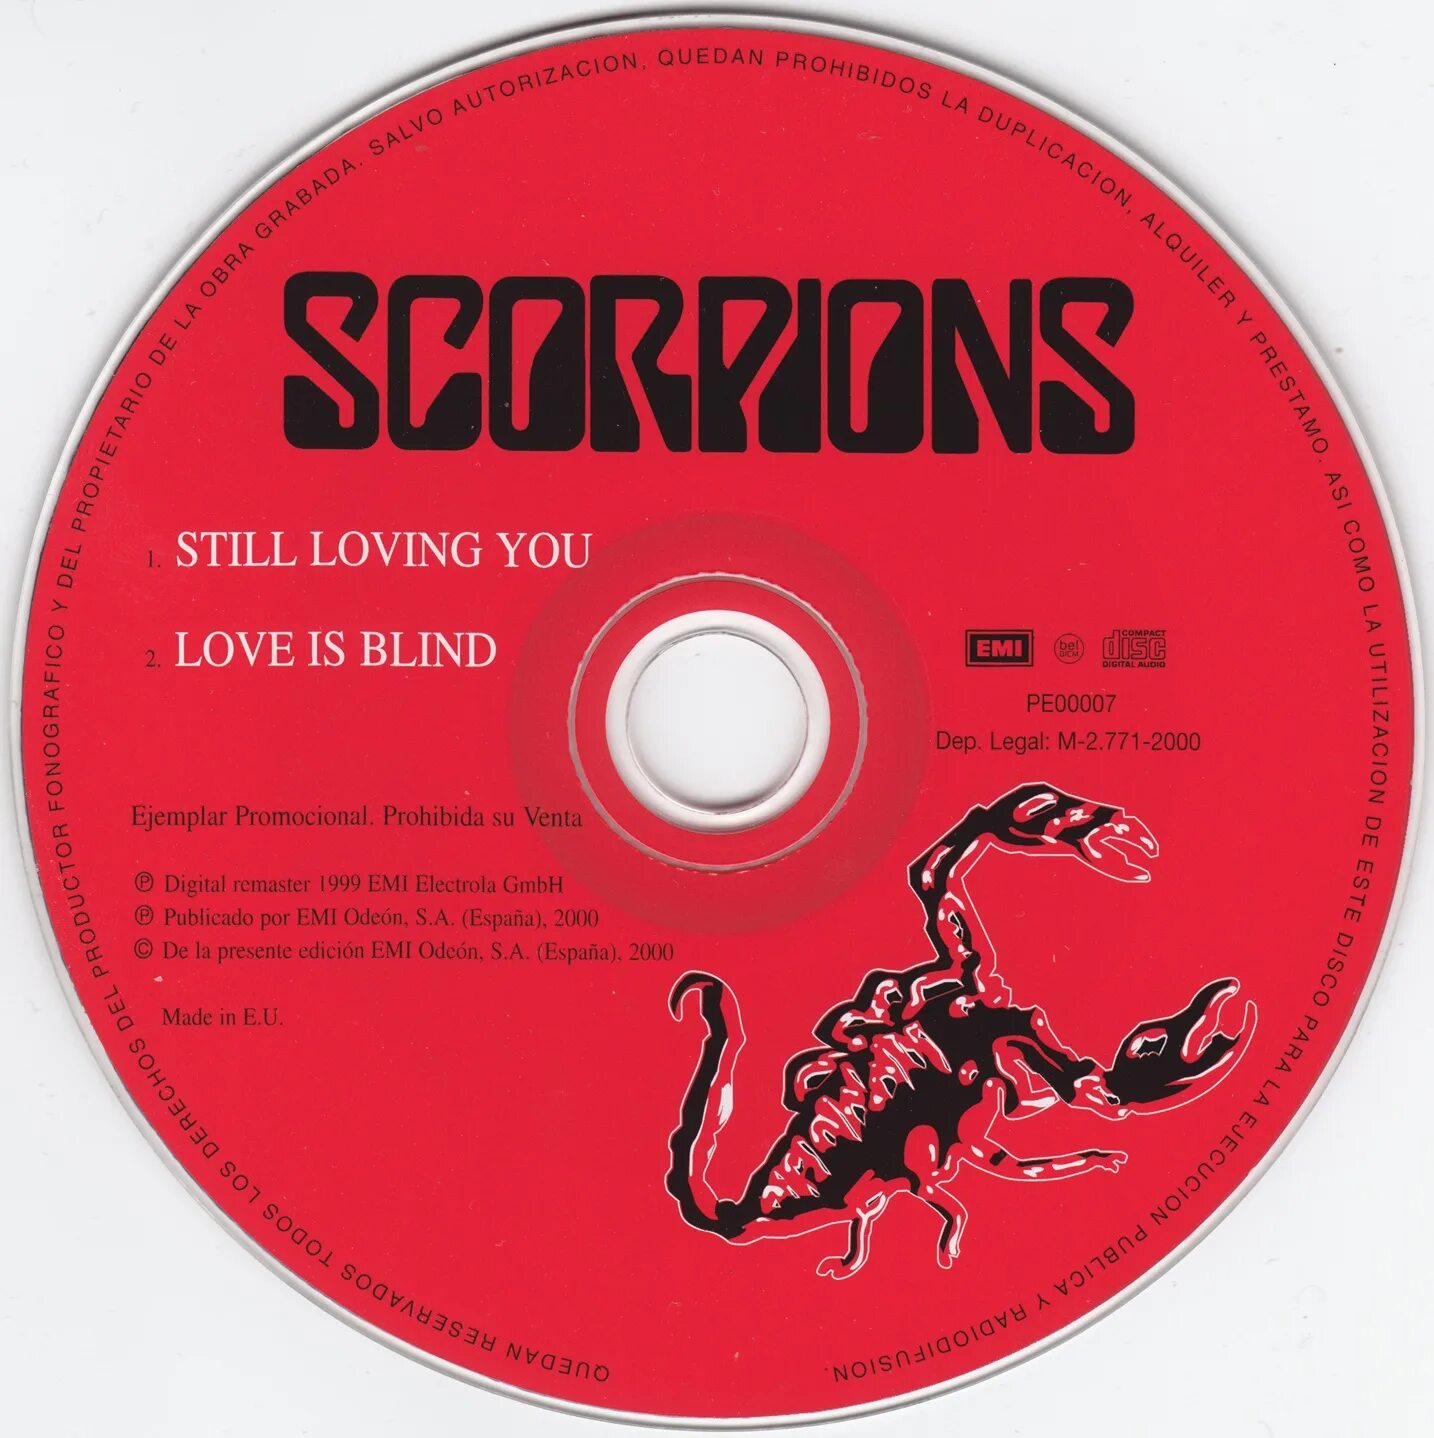 Обложка альбома Scorpions--1992-still loving. Scorpions "still loving you" 1992 обложка. Скорпионс стил. Группа Scorpions 1992. L still loving you